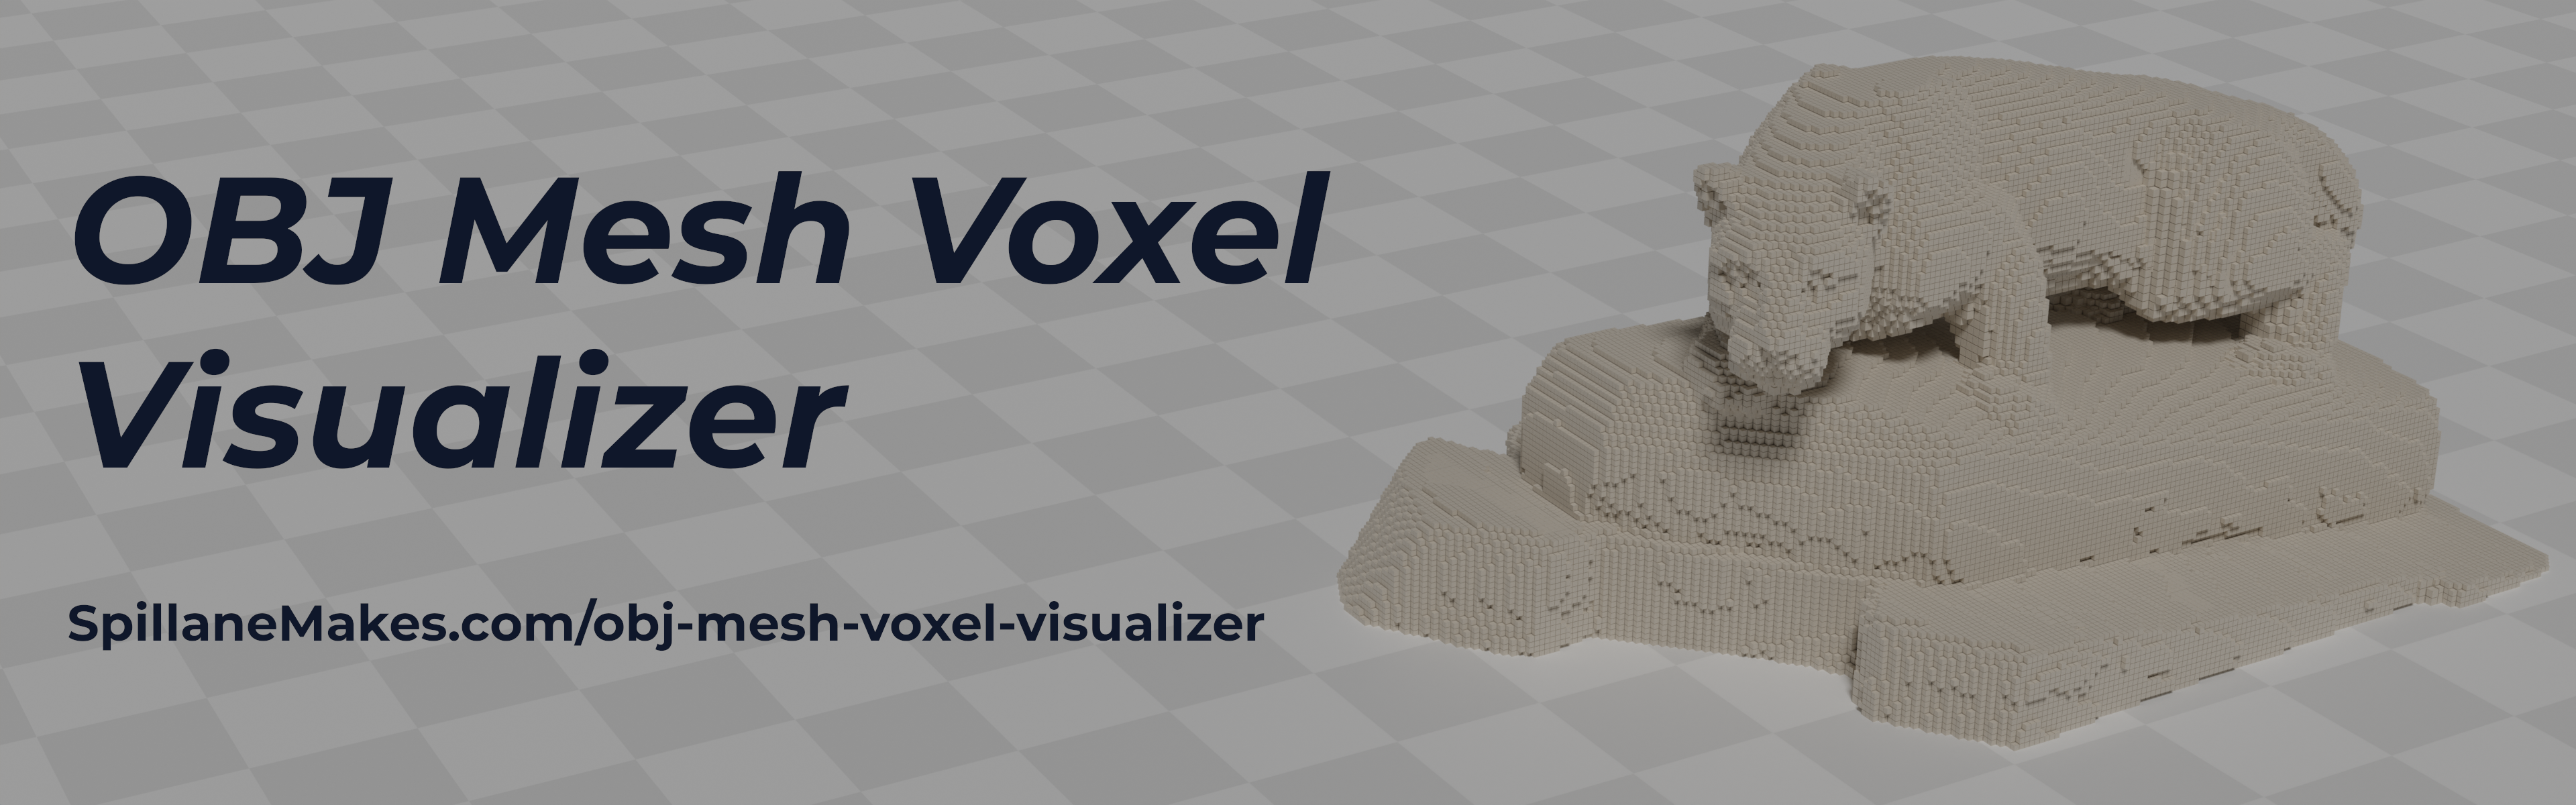 OBJ Mesh Voxel Visualizer Banner